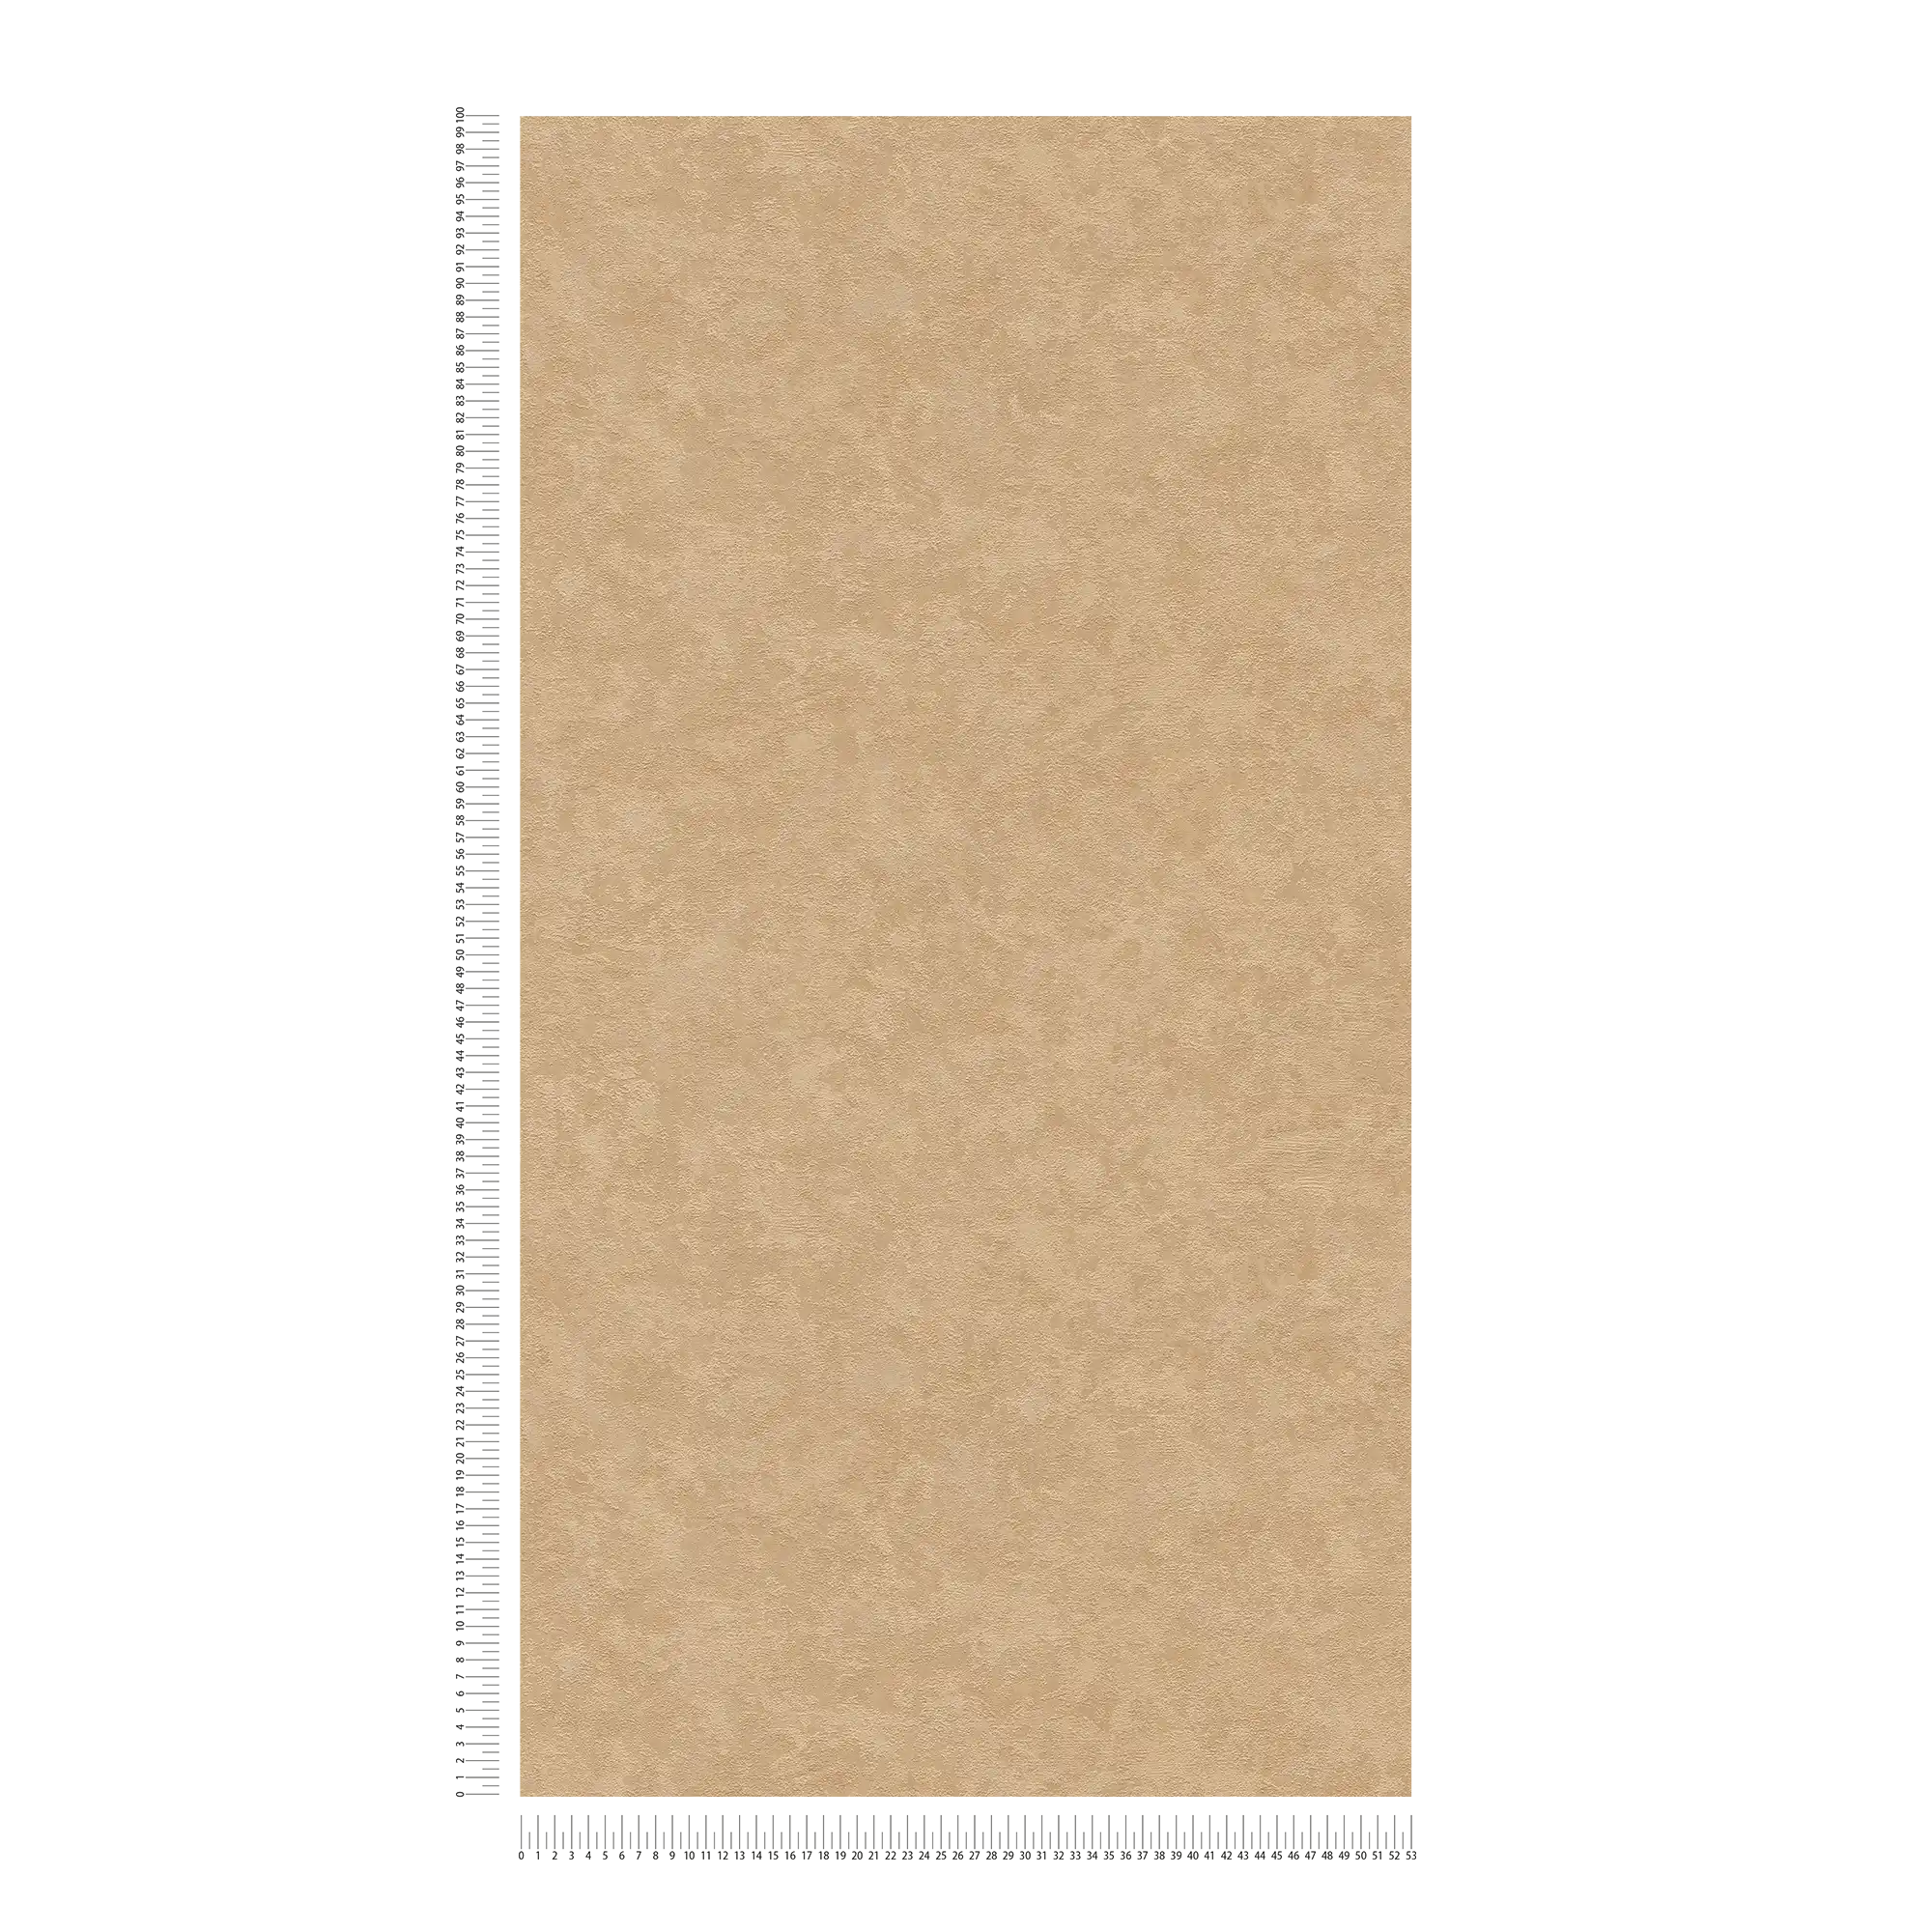             Plain wallpaper with mottled texture pattern - beige, brown
        